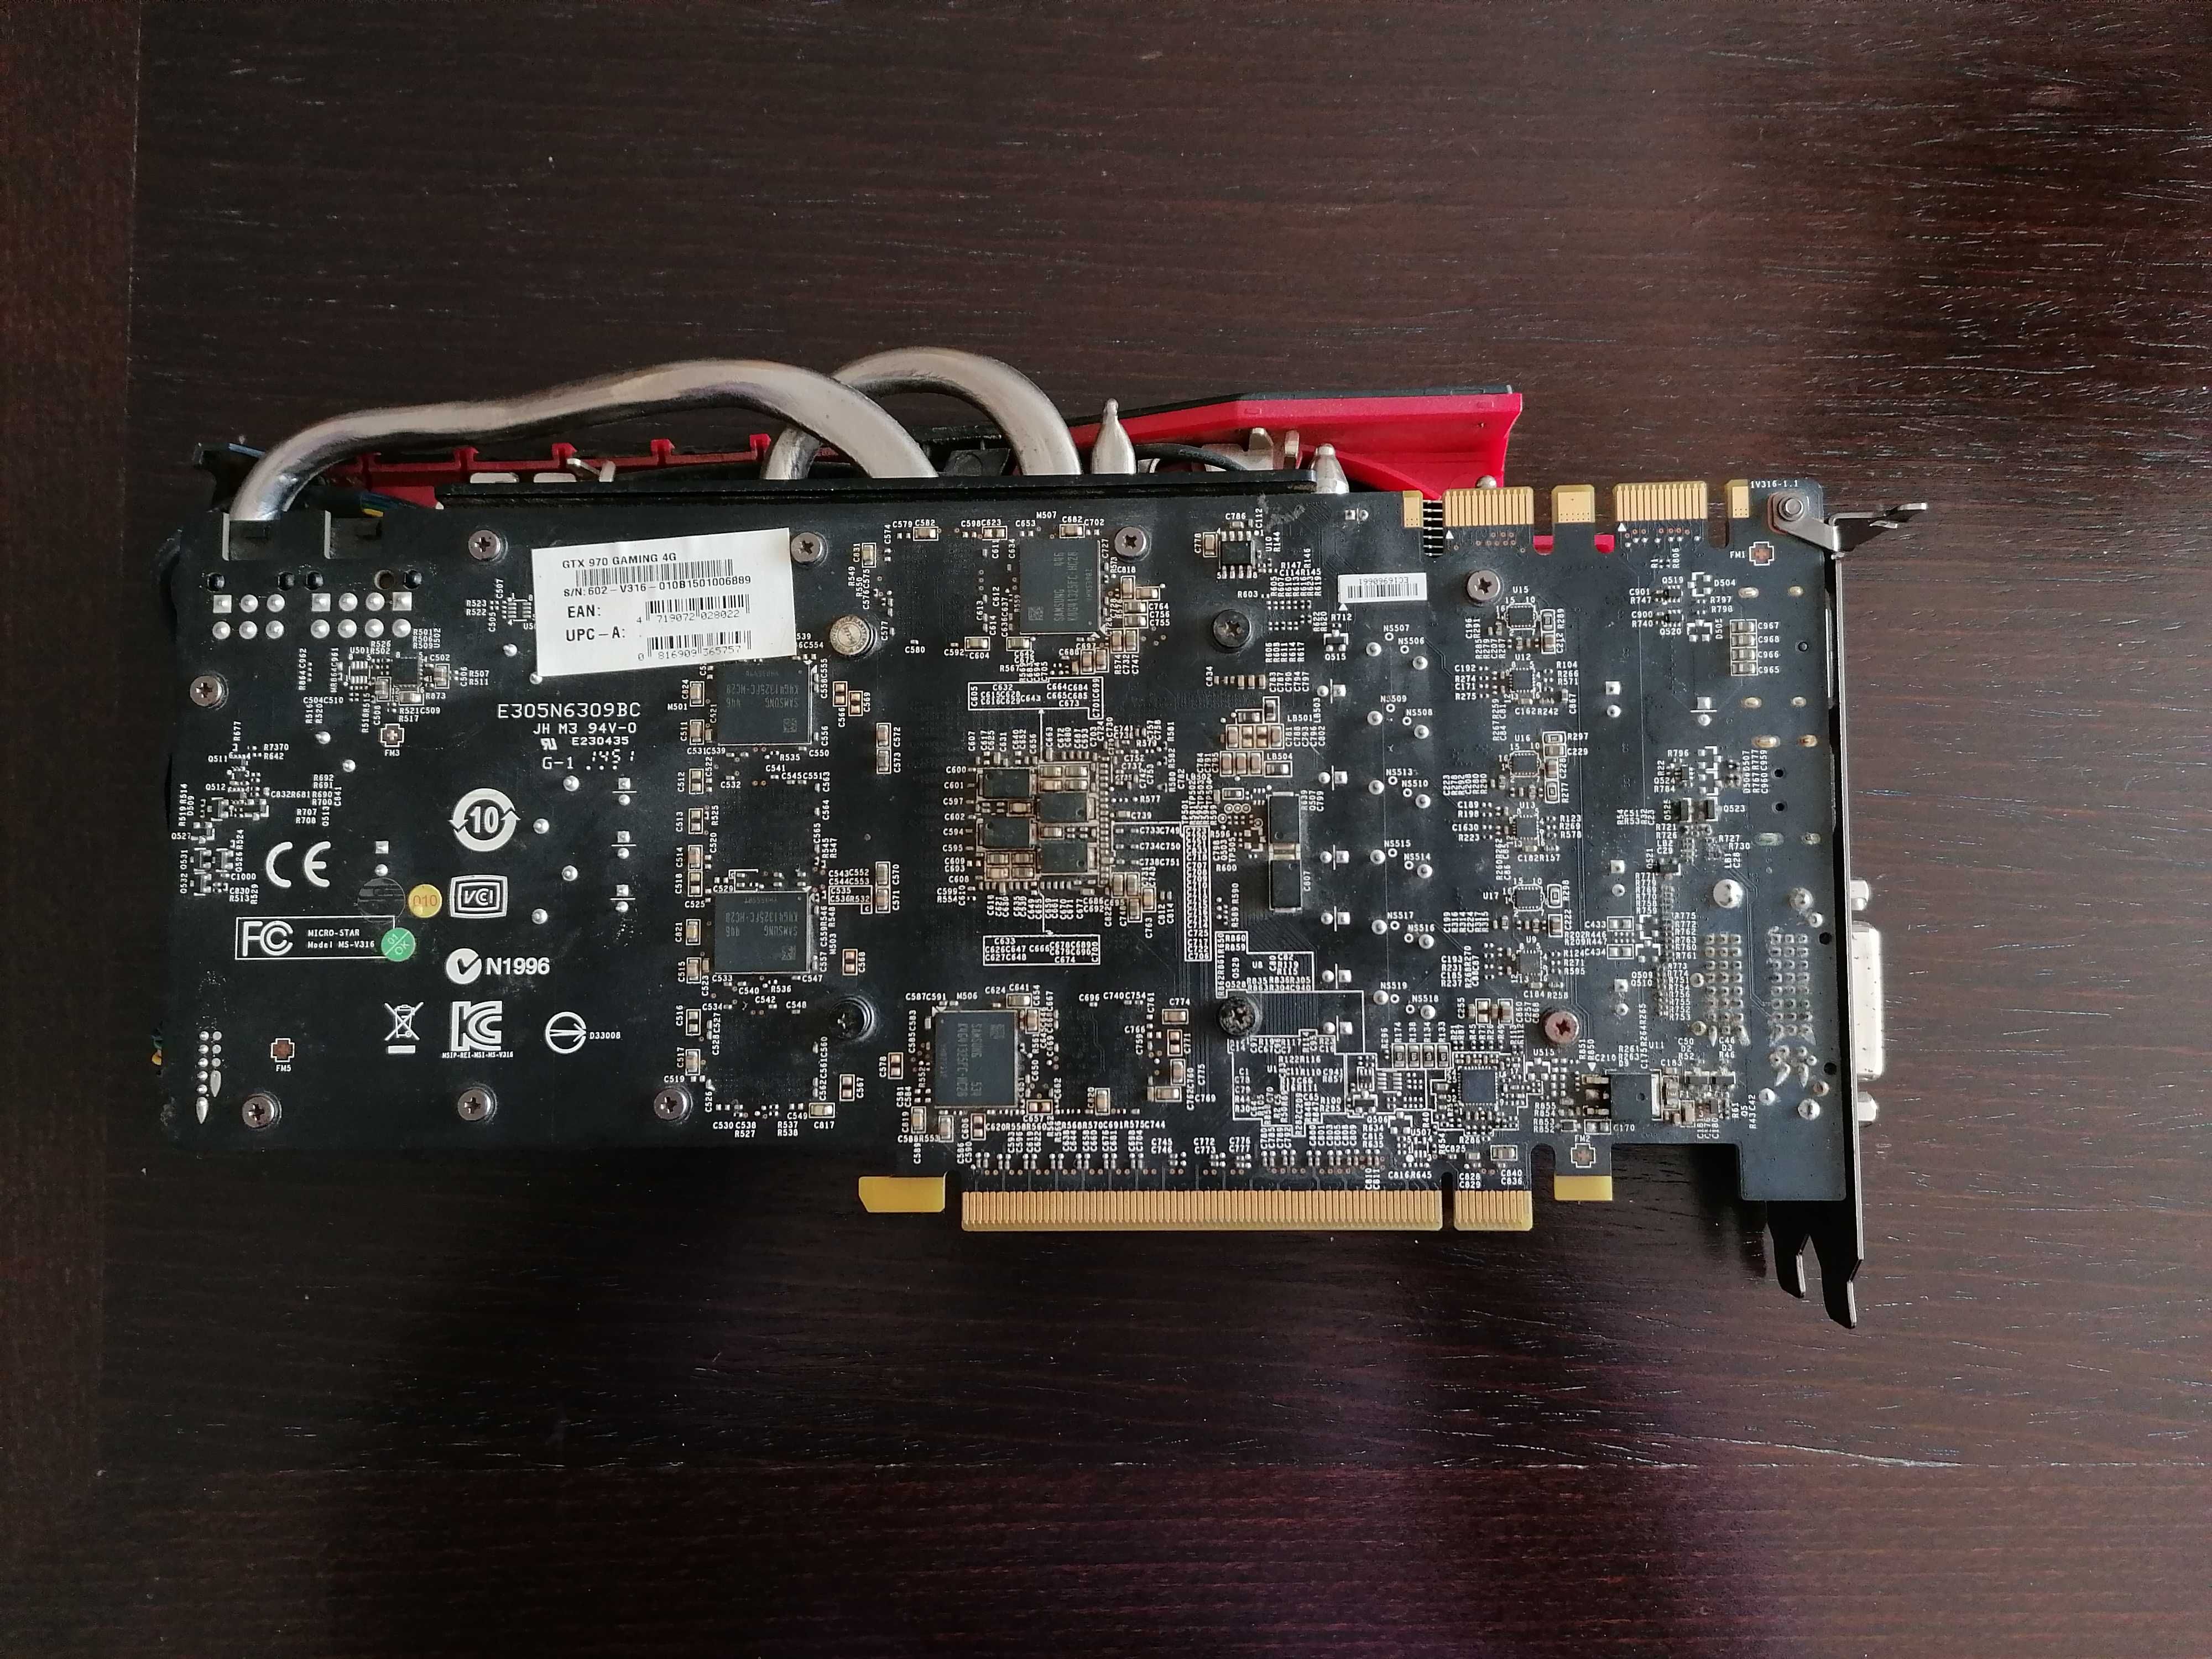 Видеокарта MSI GeForce GTX 970 Gaming 4G